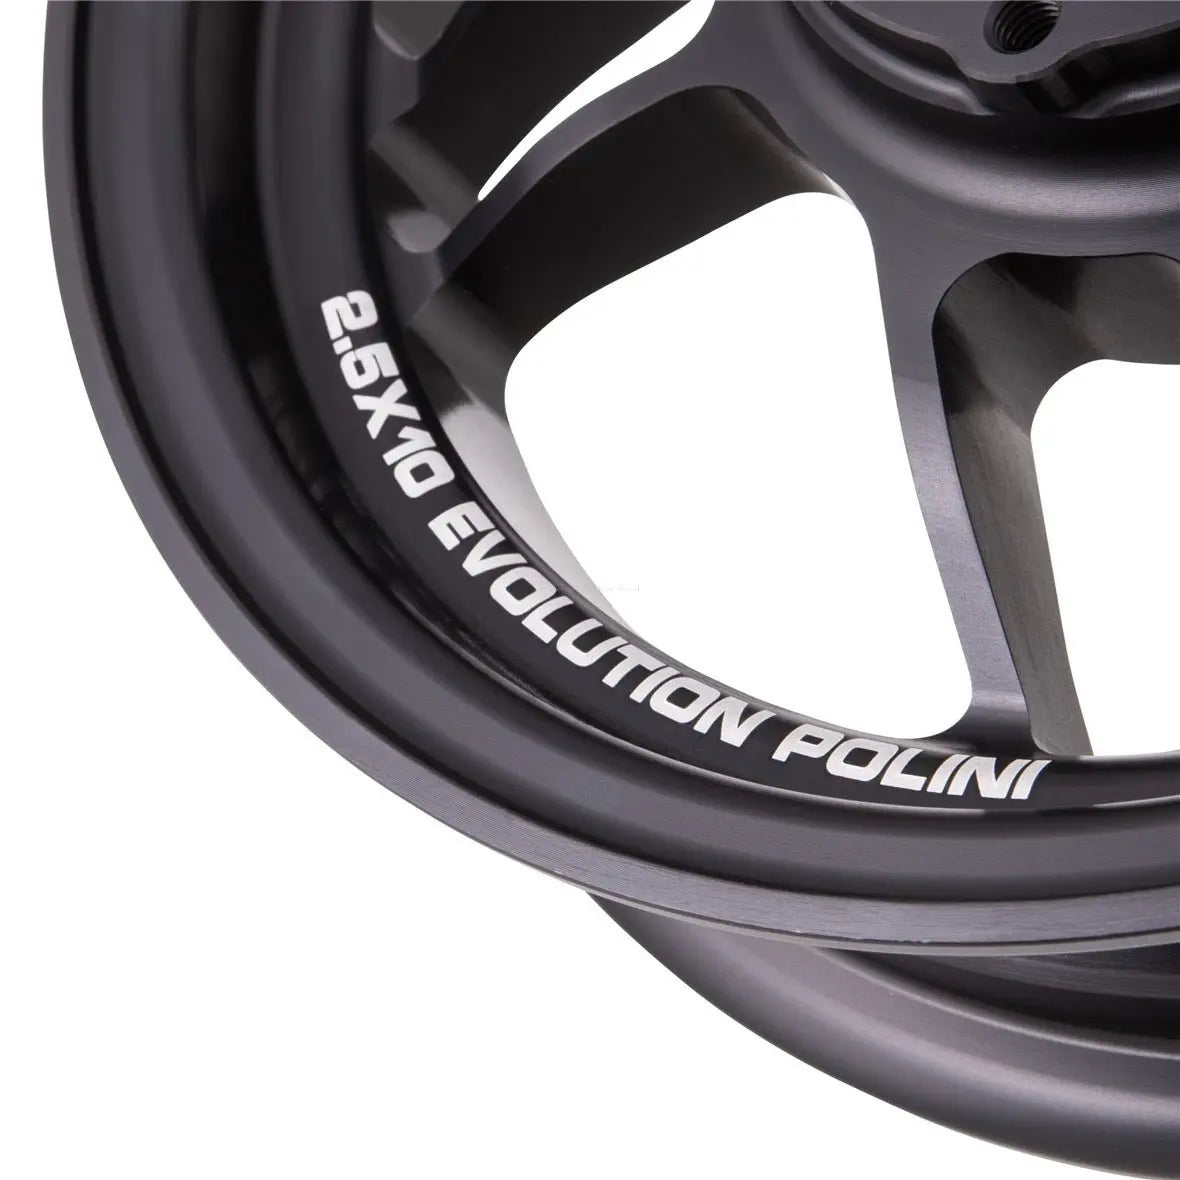 Rim POLINI Front Wheel | PIAGGIO ZIP SP Polini 769.95 Falan Parts